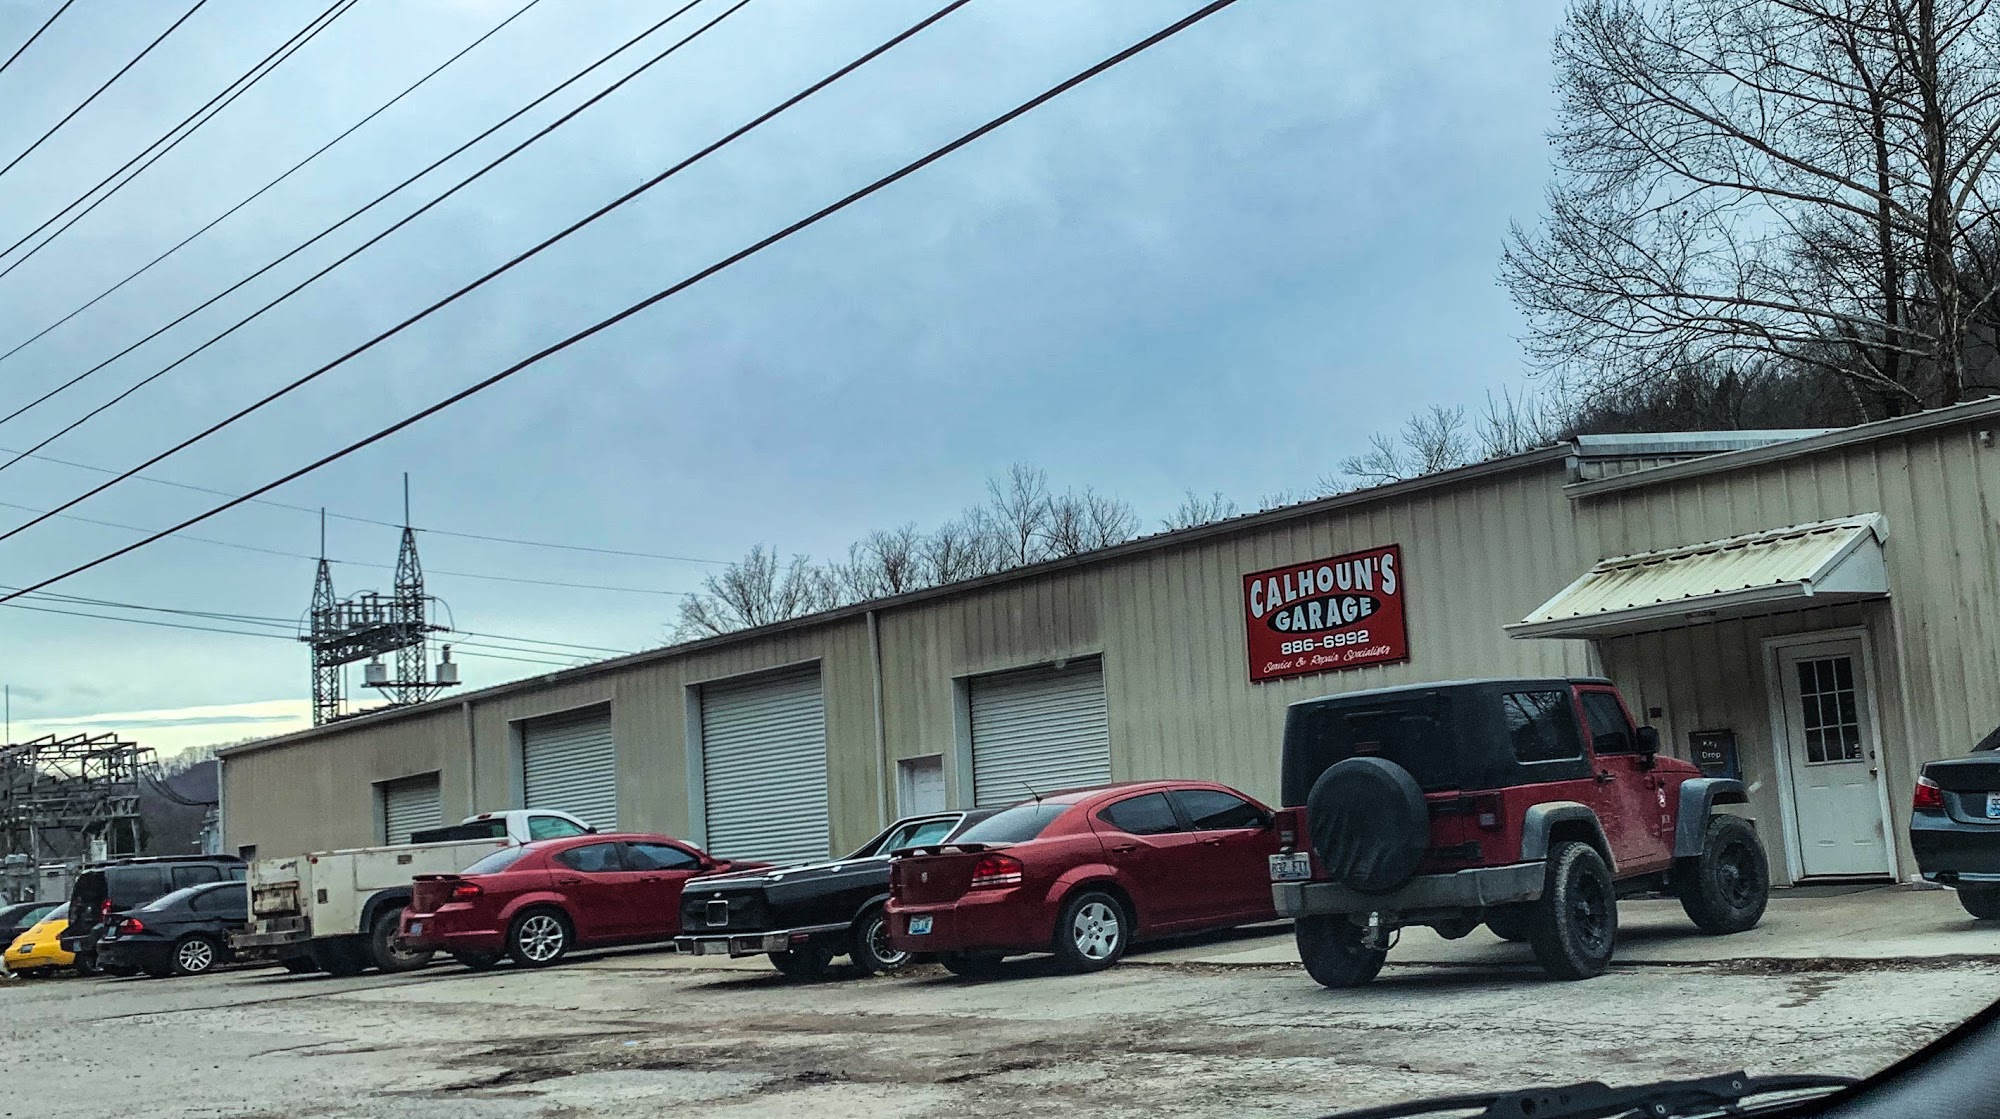 Calhoun's Garage